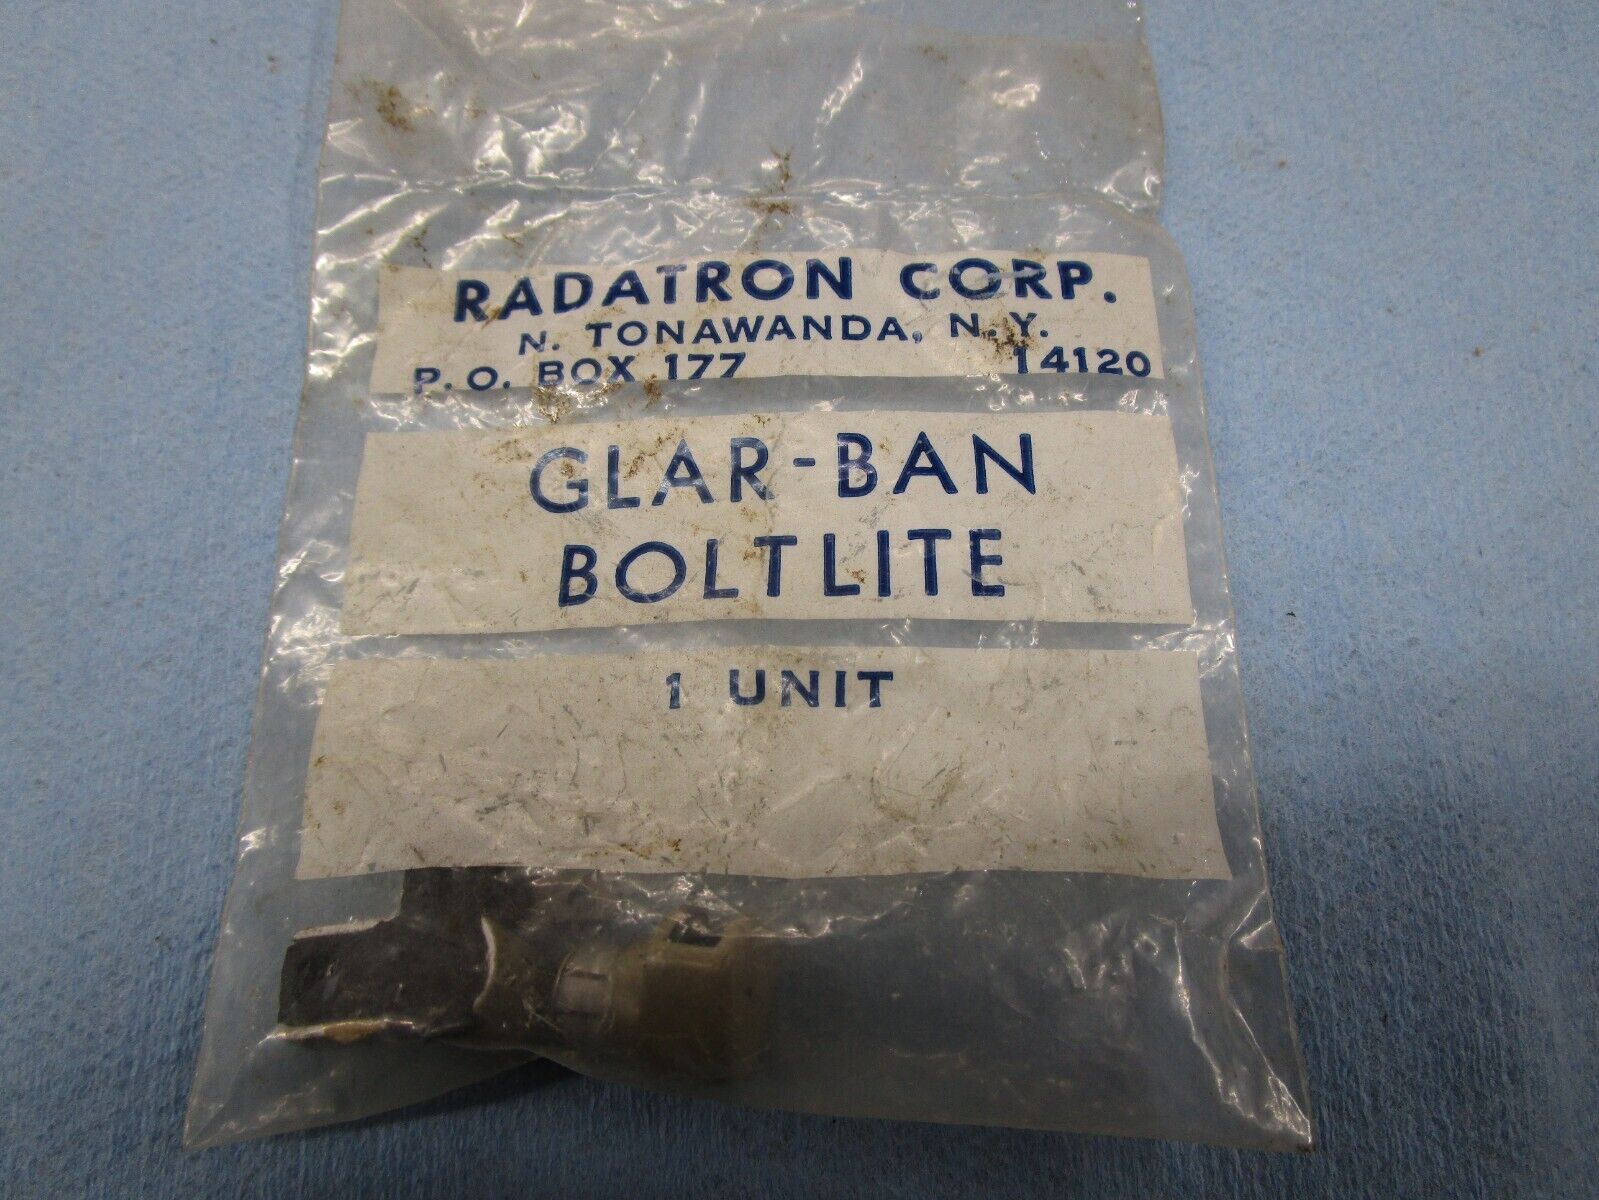 Sealed package Radatron Corp. Glar-Ban Bolt Lite Light aircraft instrument lamp